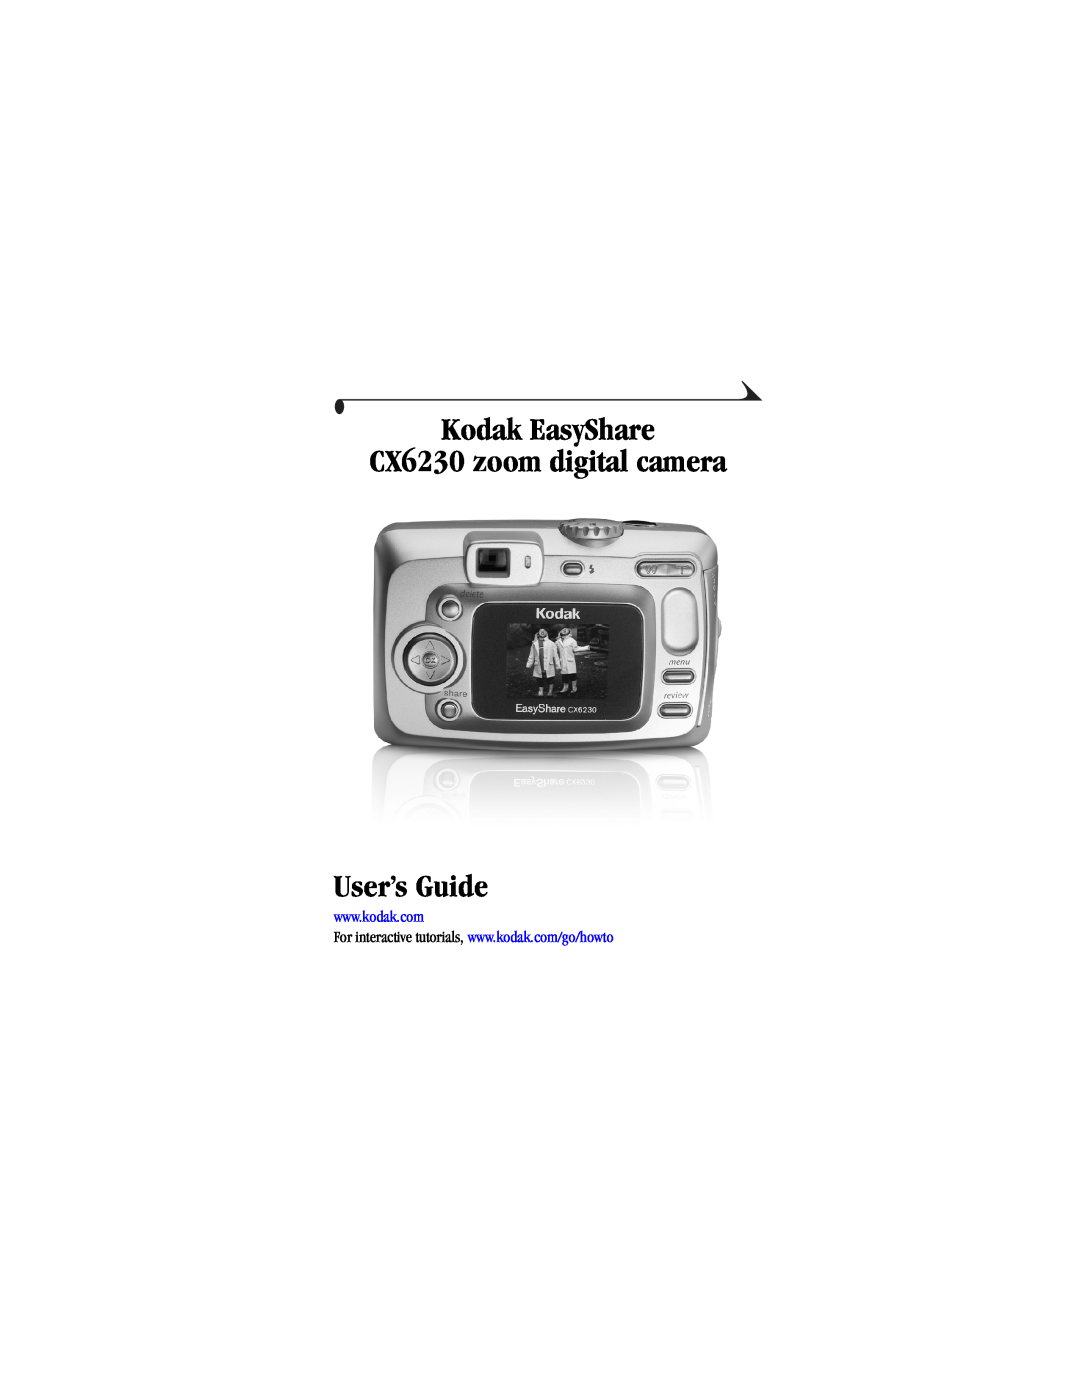 Kodak manual Kodak EasyShare CX6230 zoom digital camera User’s Guide 